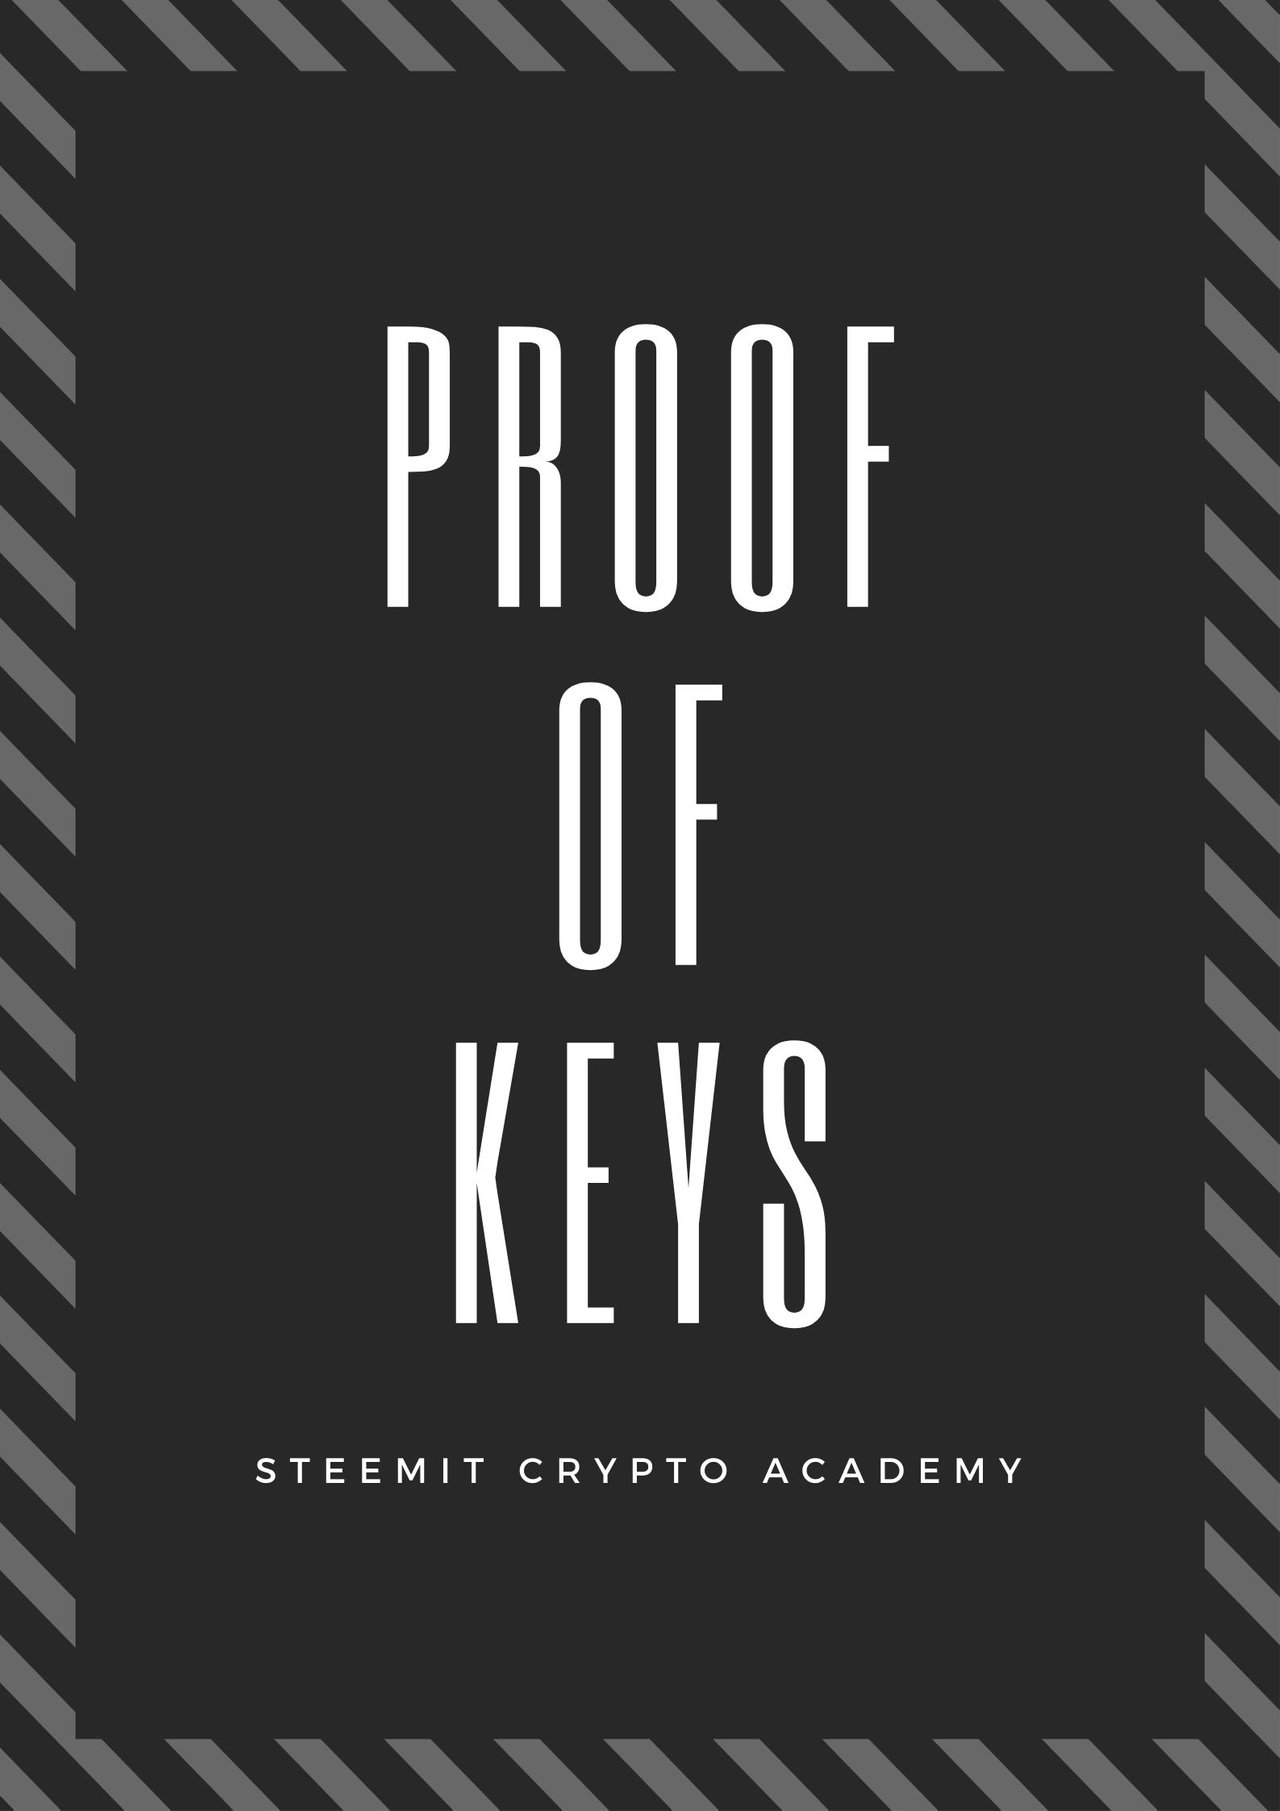 proof of keys.jpg